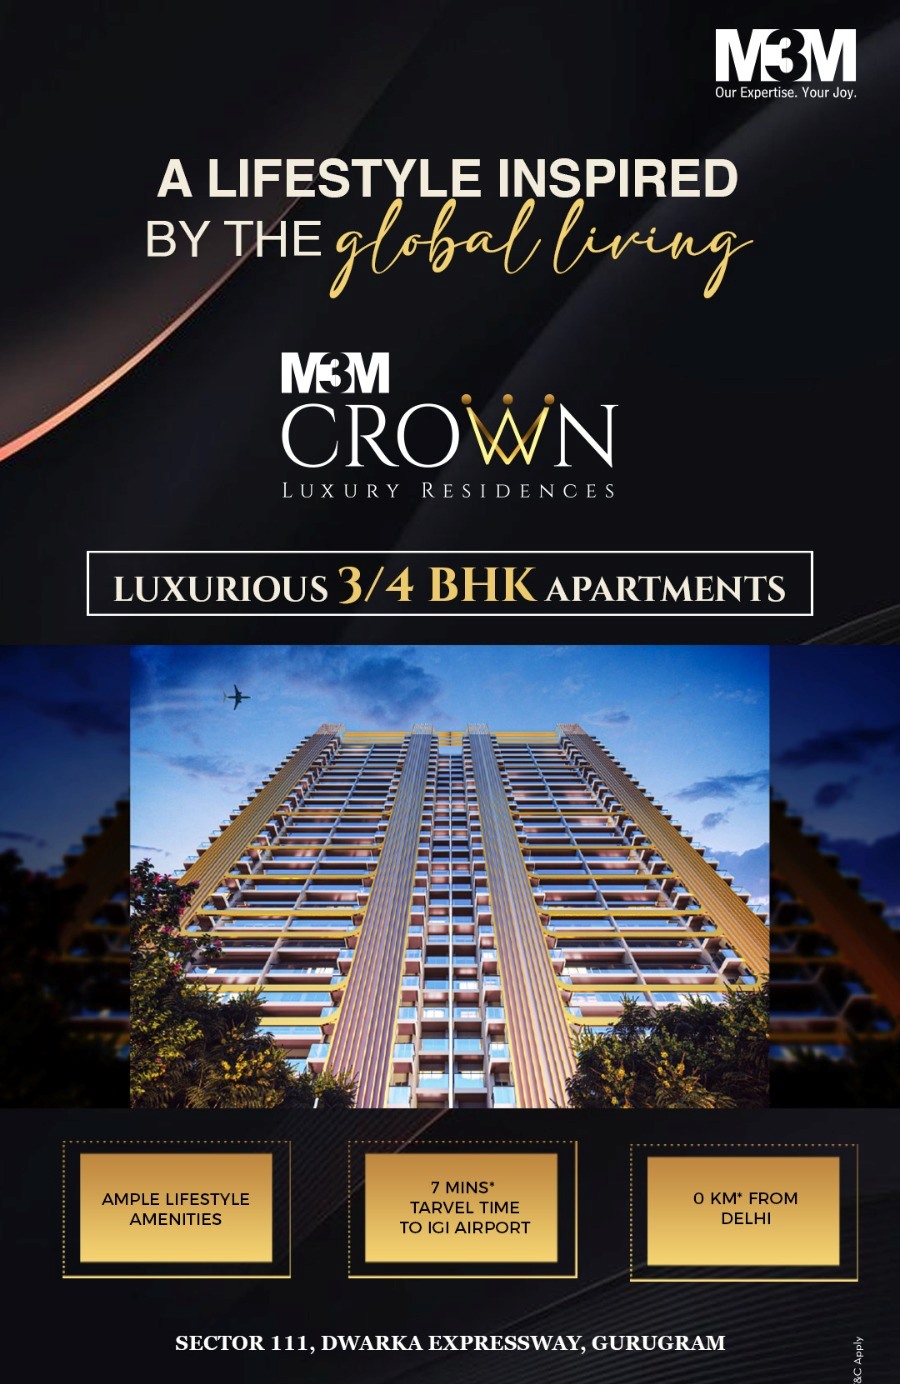 Luxurious 3/4 BHK apartments at M3M Crown in Dwarka Expressway, Gurgaon Update